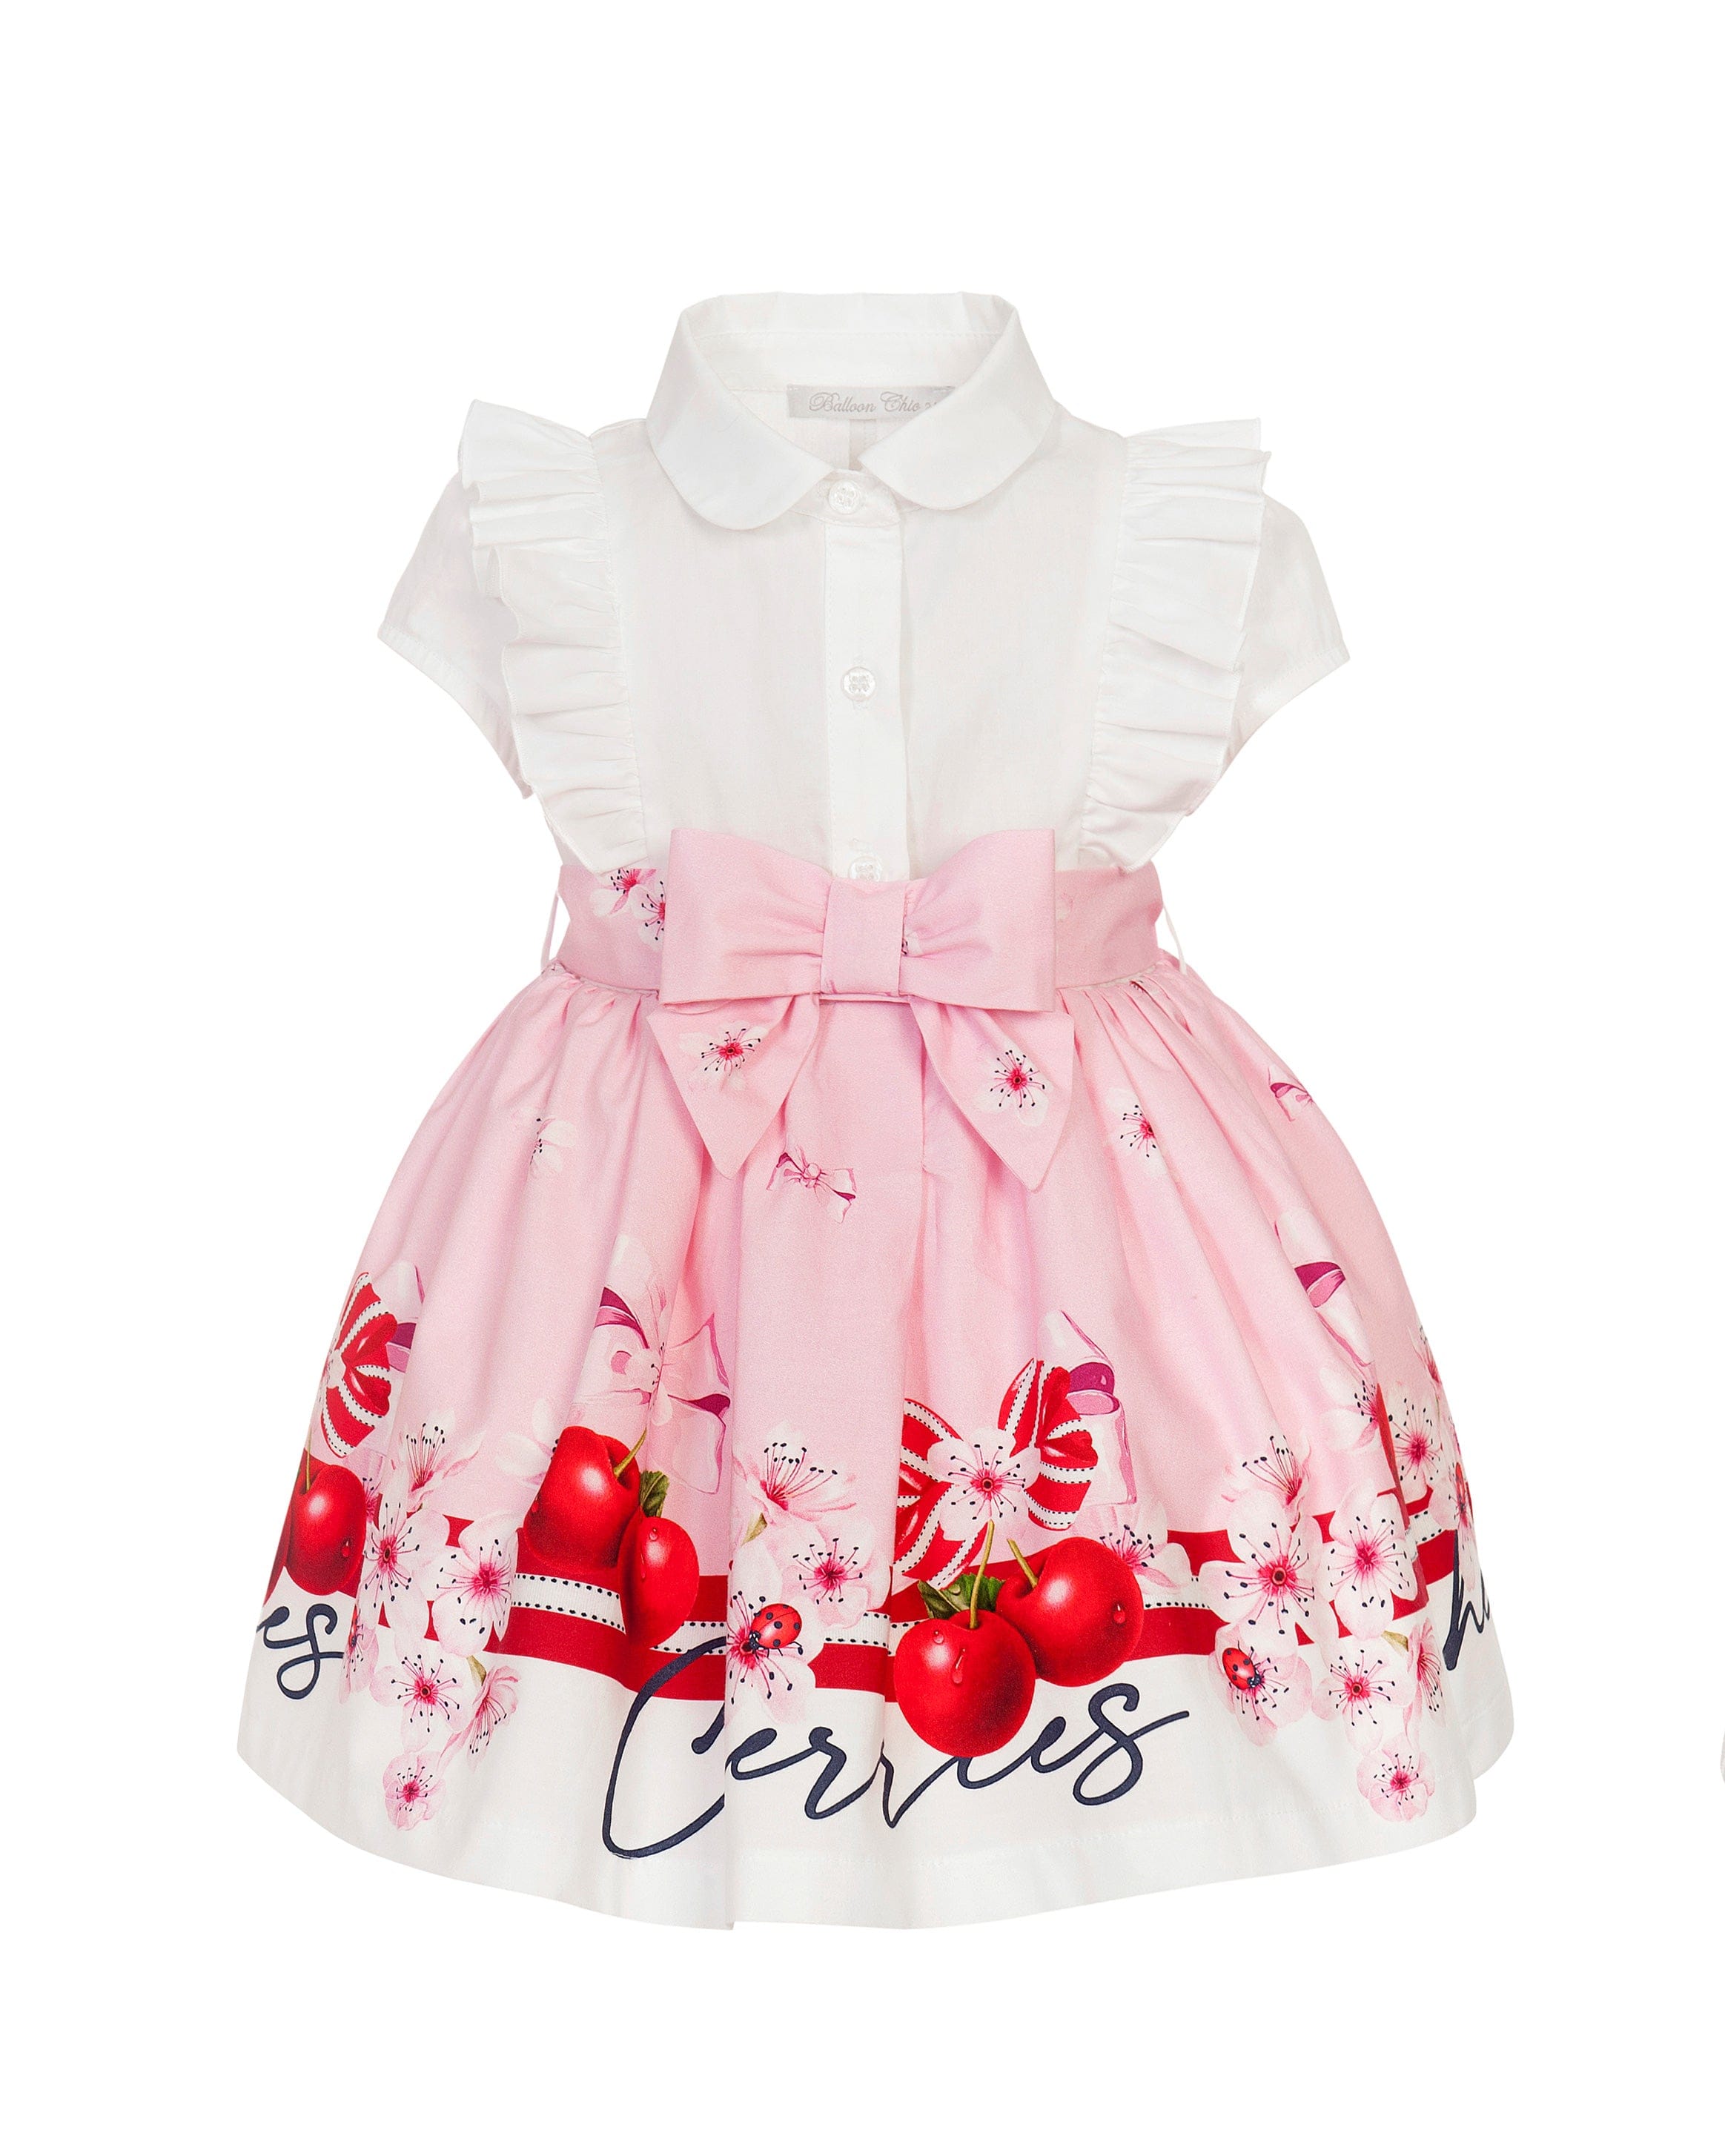 BALLOON CHIC - Cherry Blouse Dress - Pink